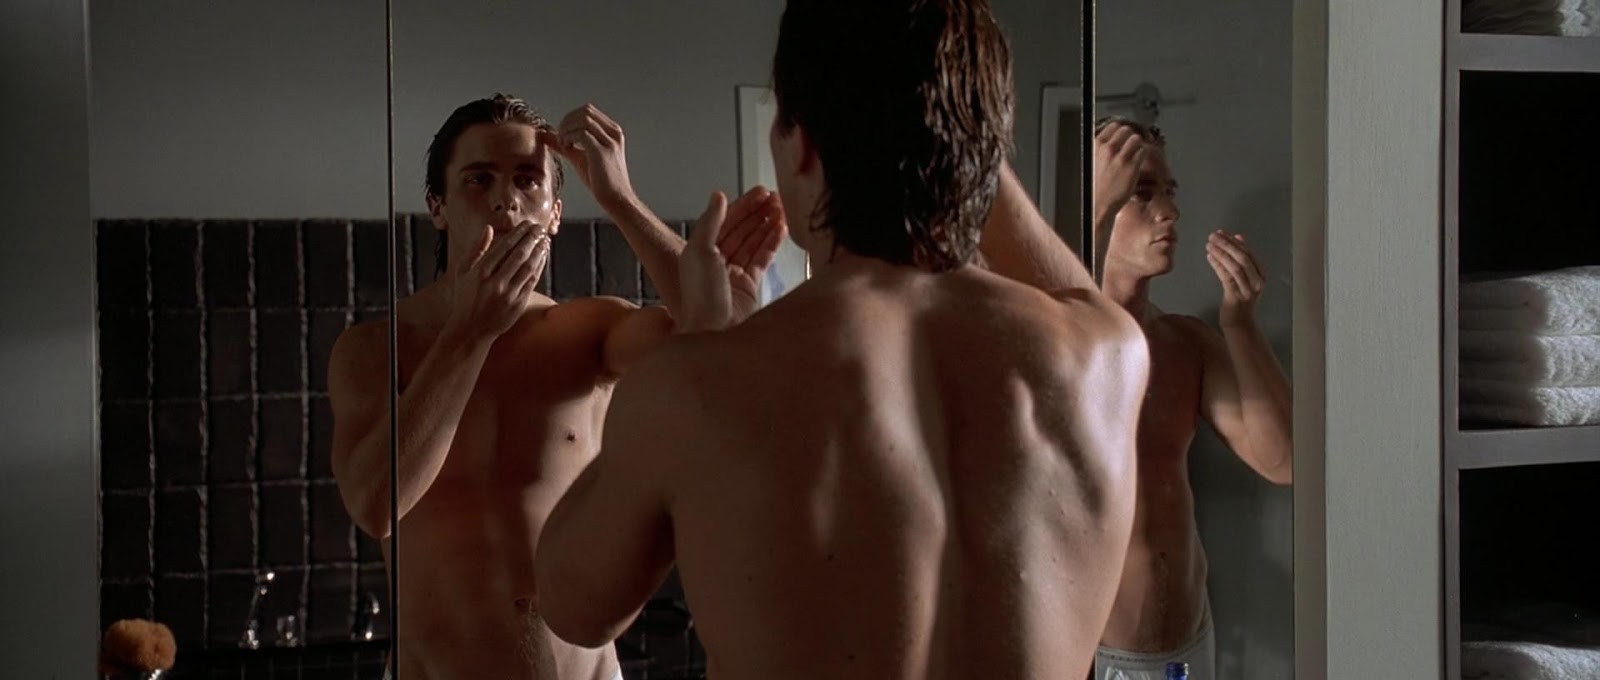 Christian Bale in "American Psycho" (2000) - Nudi al cinema